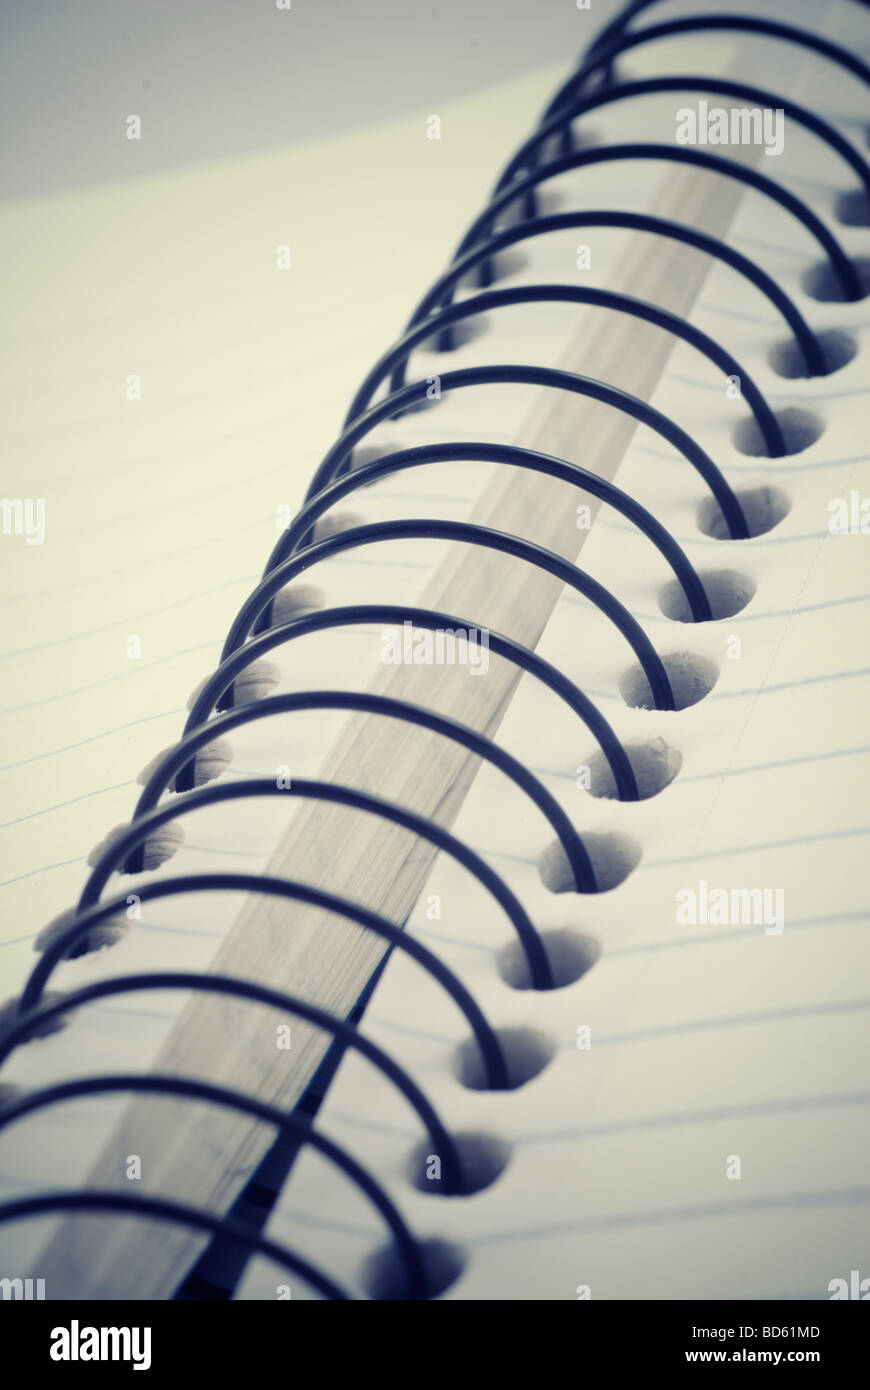 Close up of a spiral binder of a notebook Stock Photo